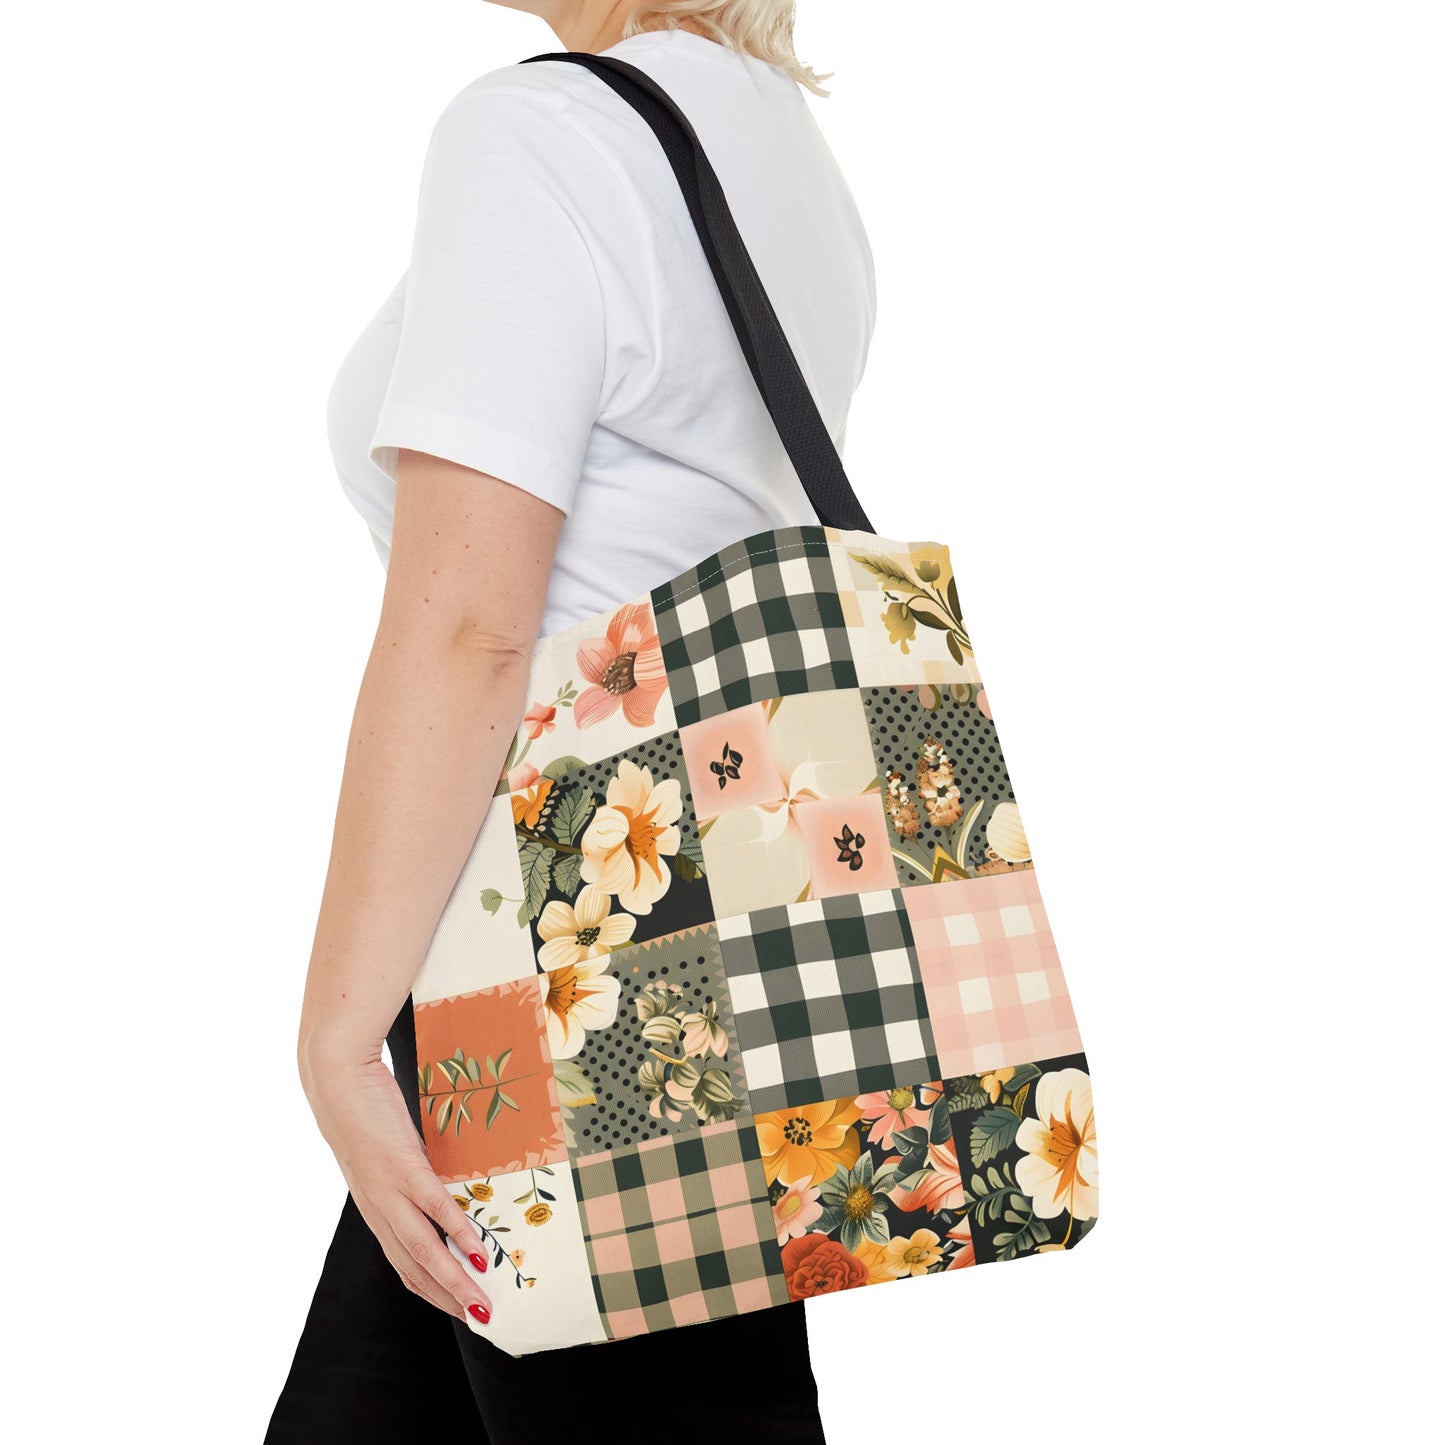 Cute Patchwork Pattern Tote Bag